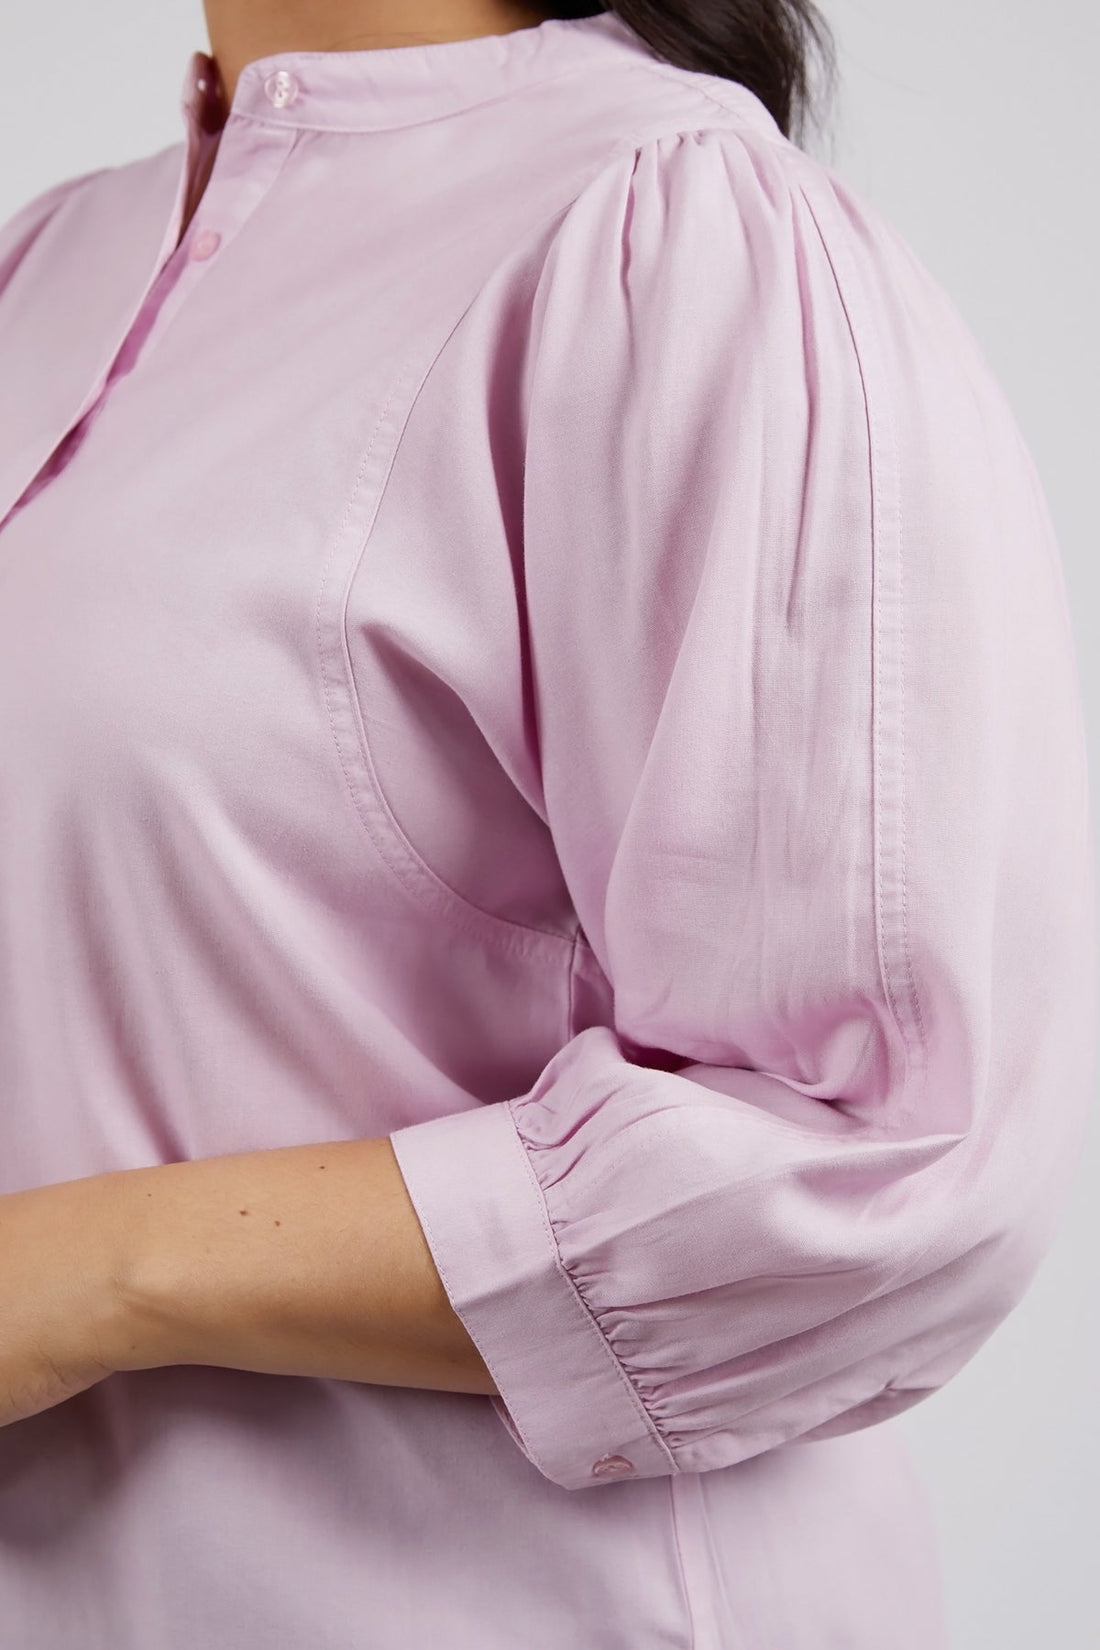 Rowan Shirt - Powder Pink